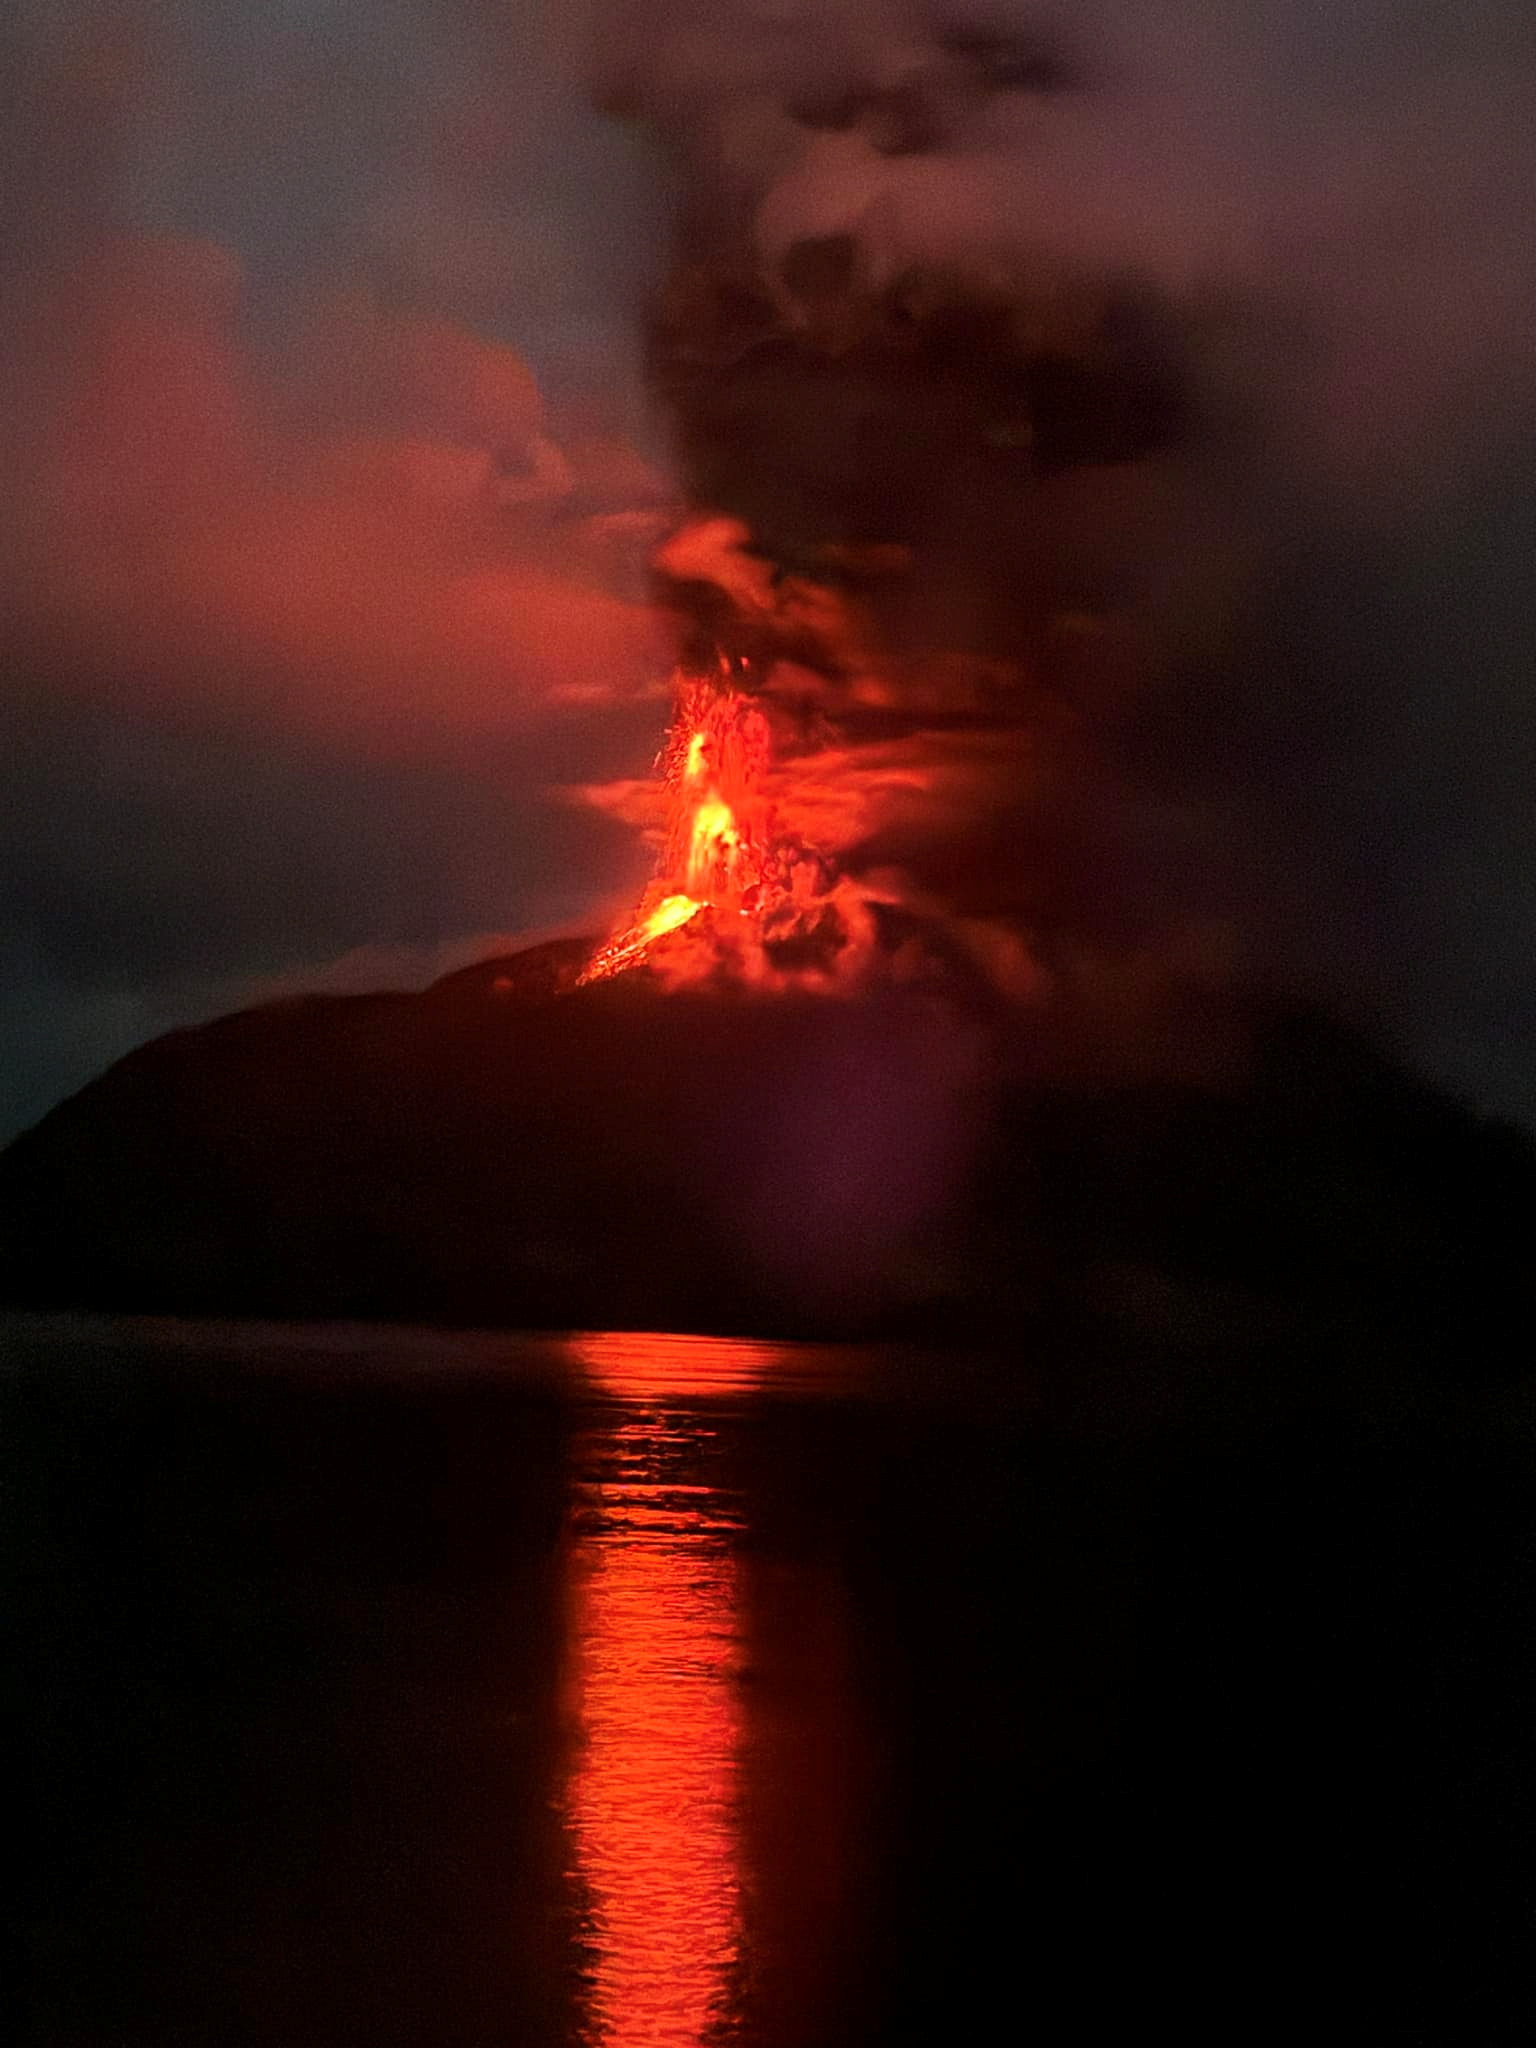 Mount Ruang volcano spews volcanic ash as seen from Siau Tagulandang Biaro